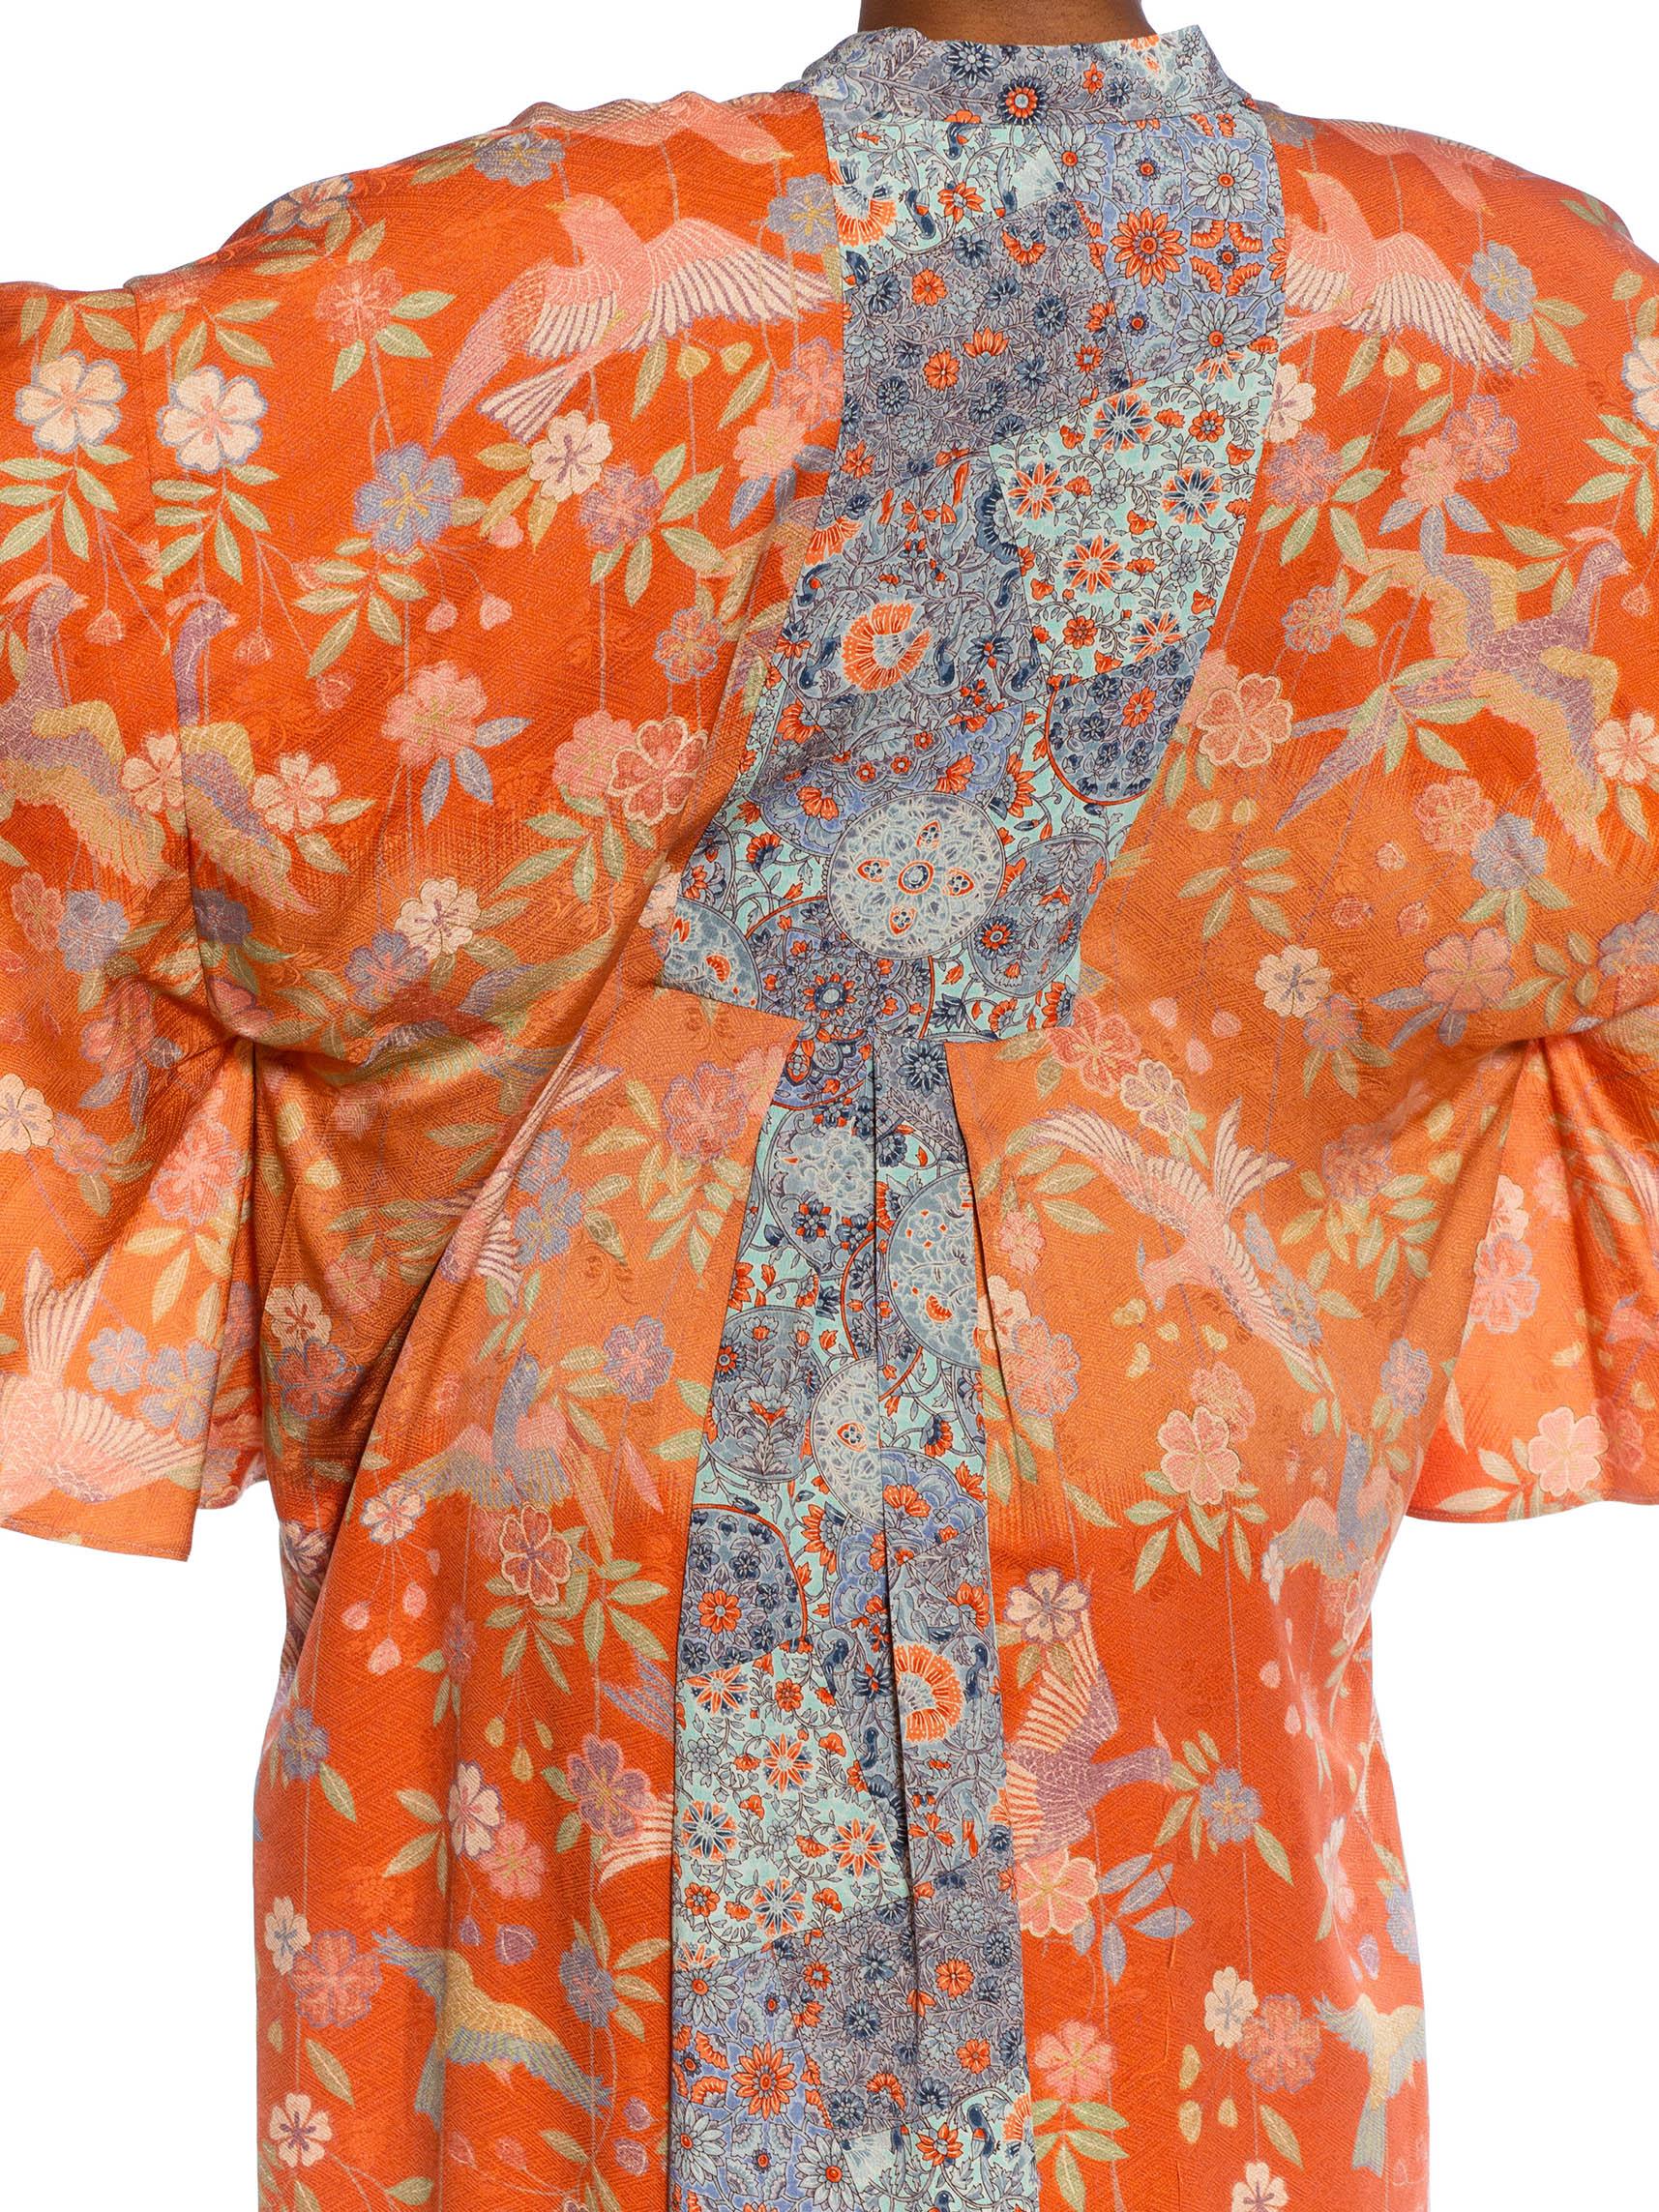 MORPHEW COLLECTION Orange Ombré Floral Japanese Kimono Silk Kaftan 6